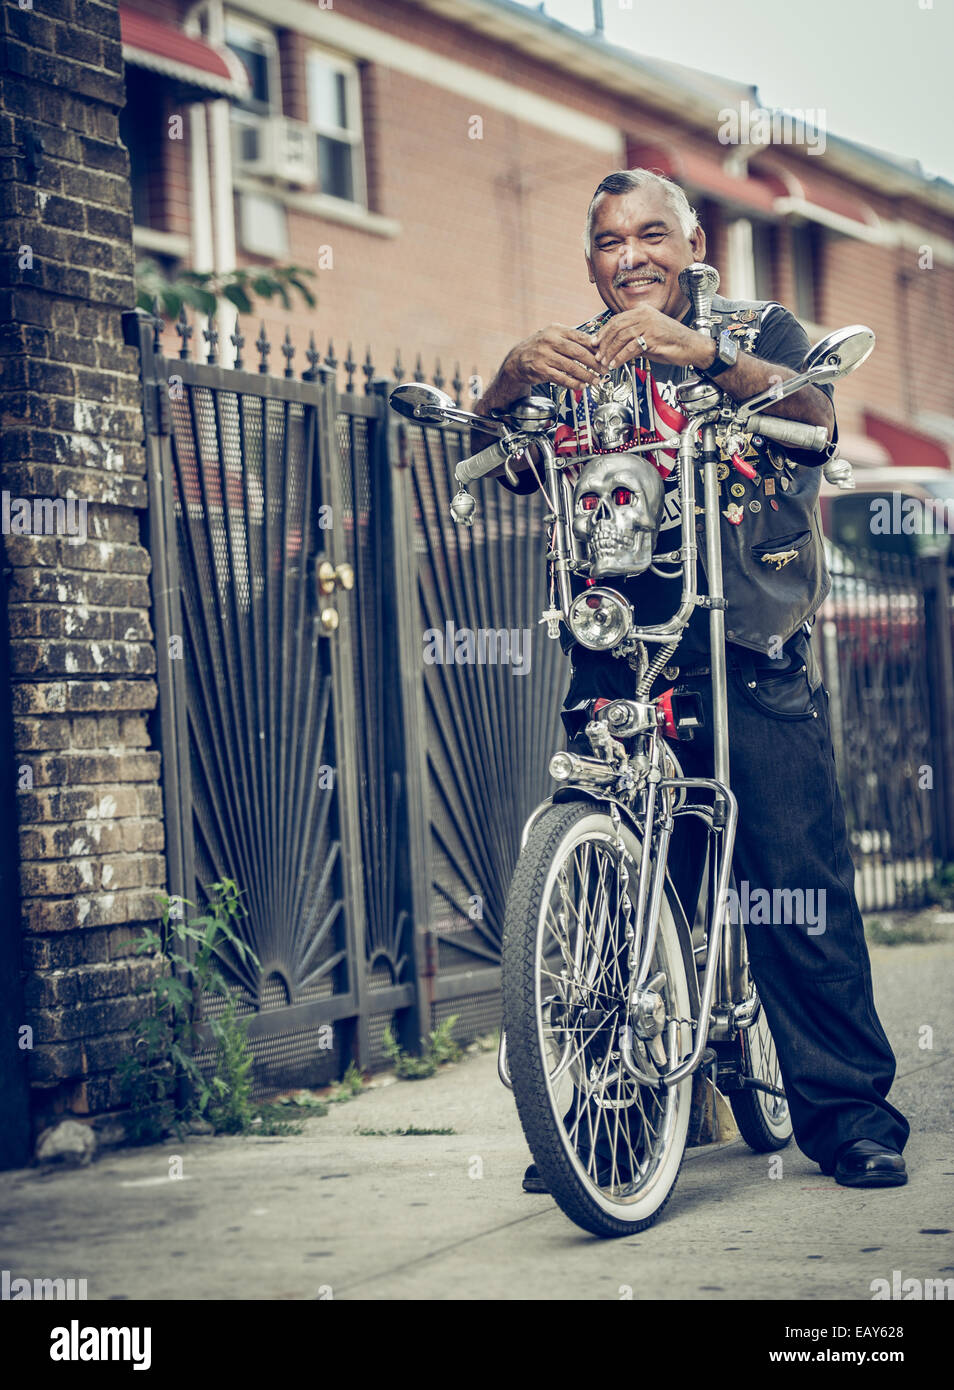 Latino man pose avec son vélo du broyeur Photo Stock - Alamy